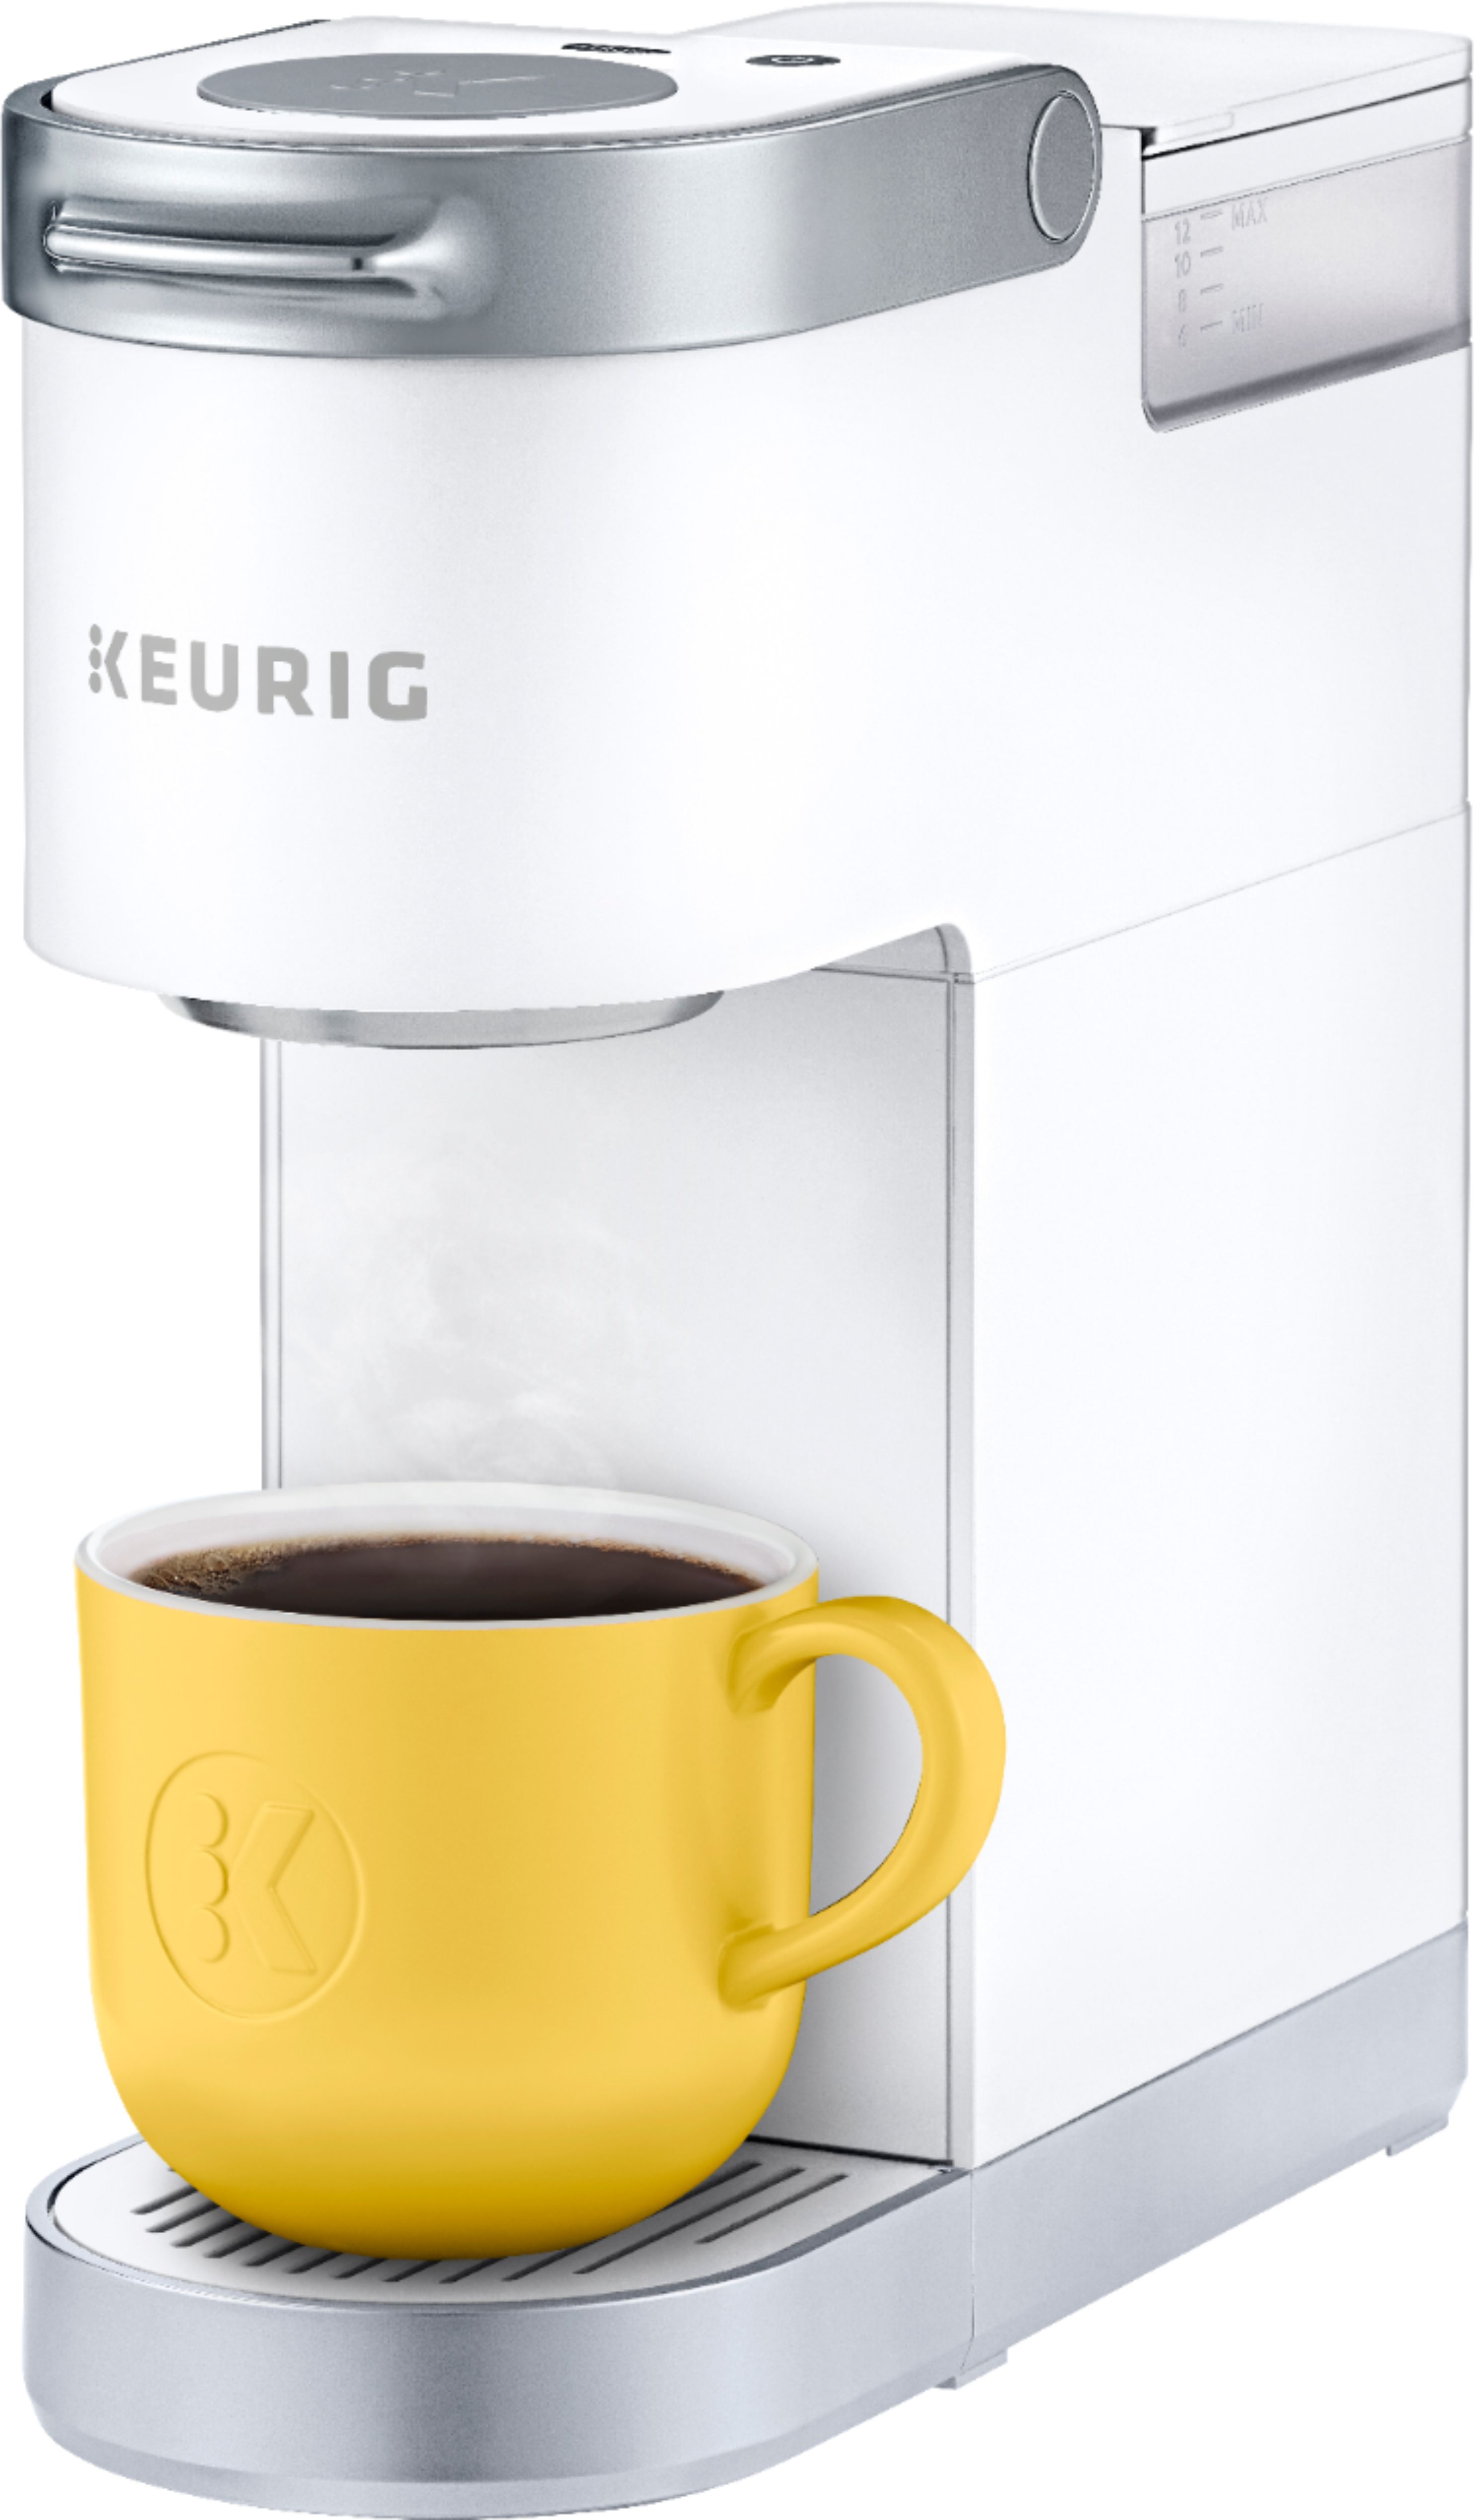 A Little Aqua Kitchen Inspiration  Coffee maker, Single coffee maker,  Keurig coffee